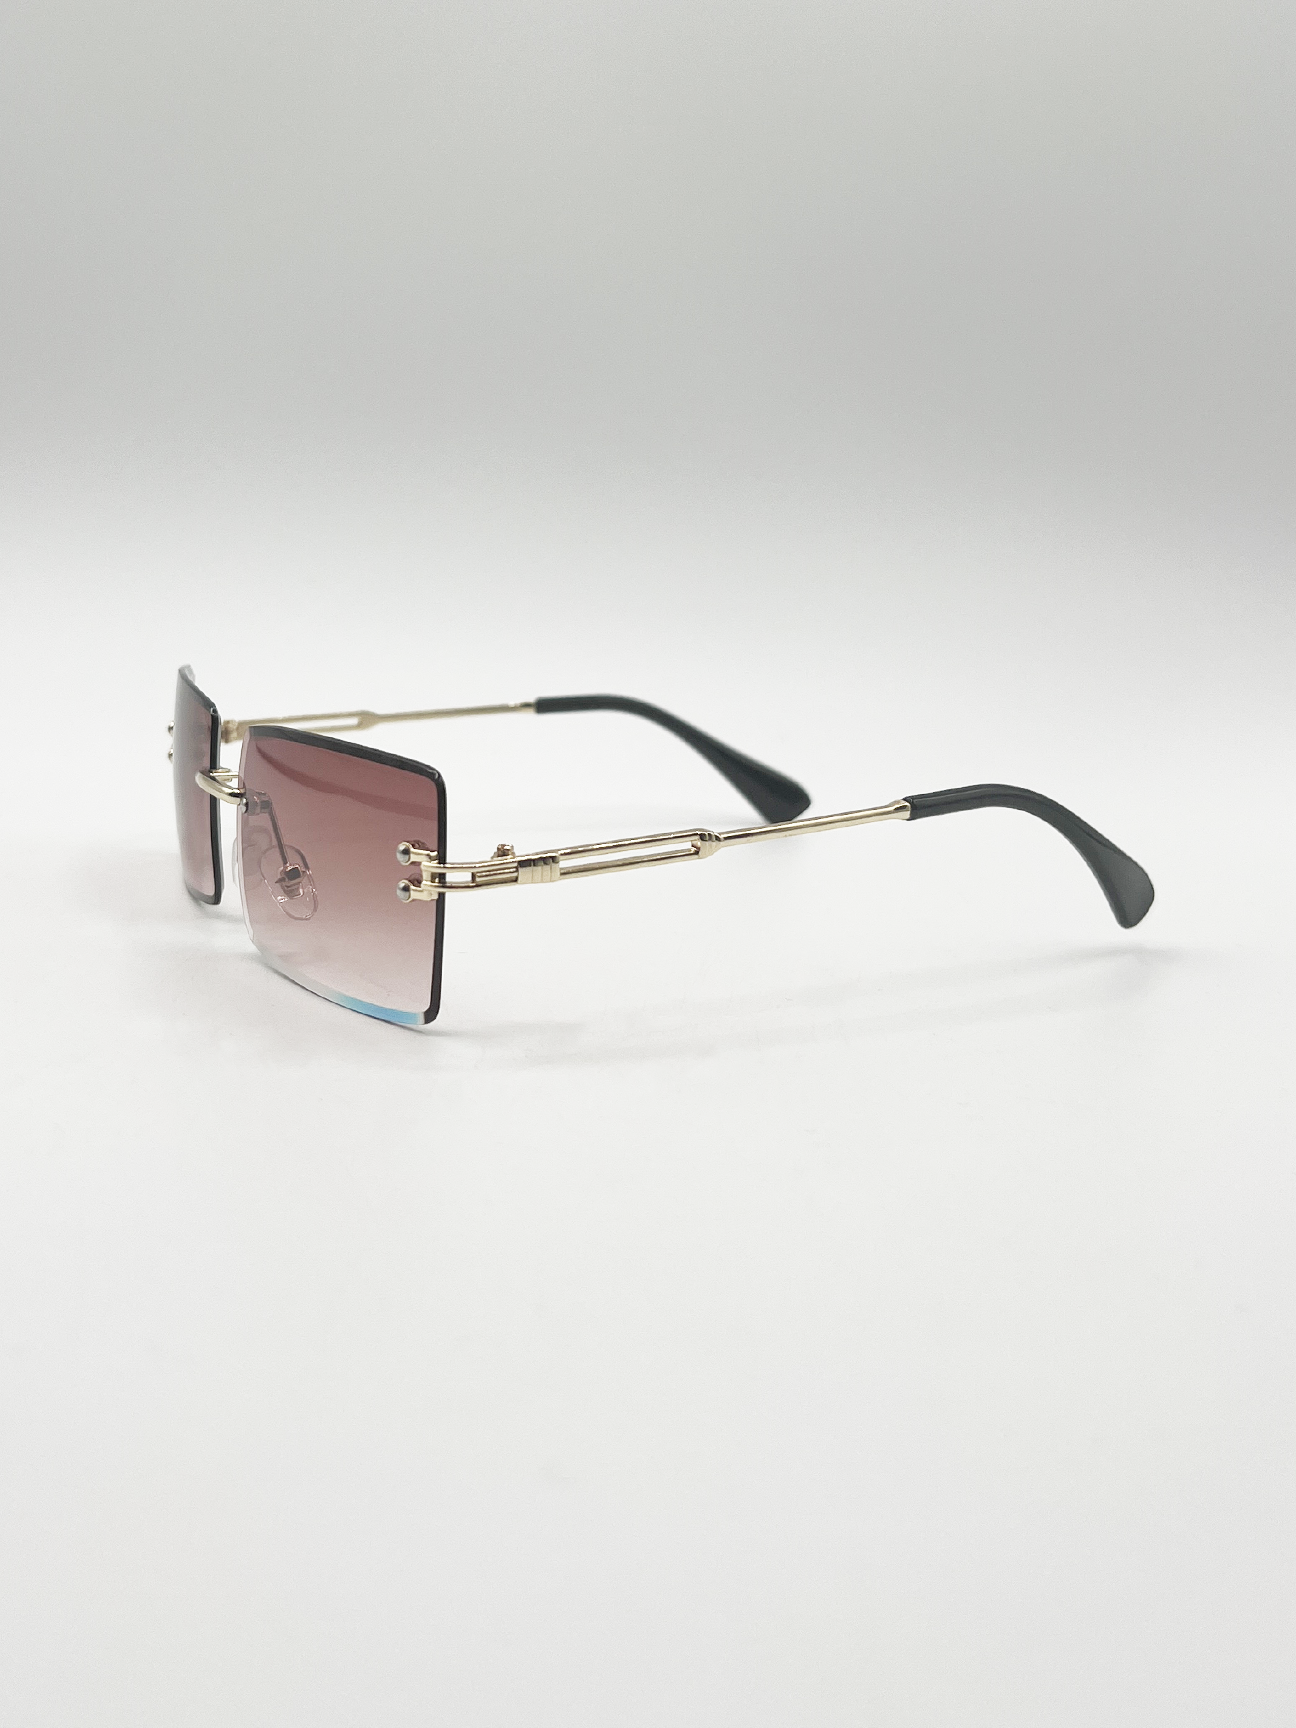 Frameless Square Sunglasses in Brown